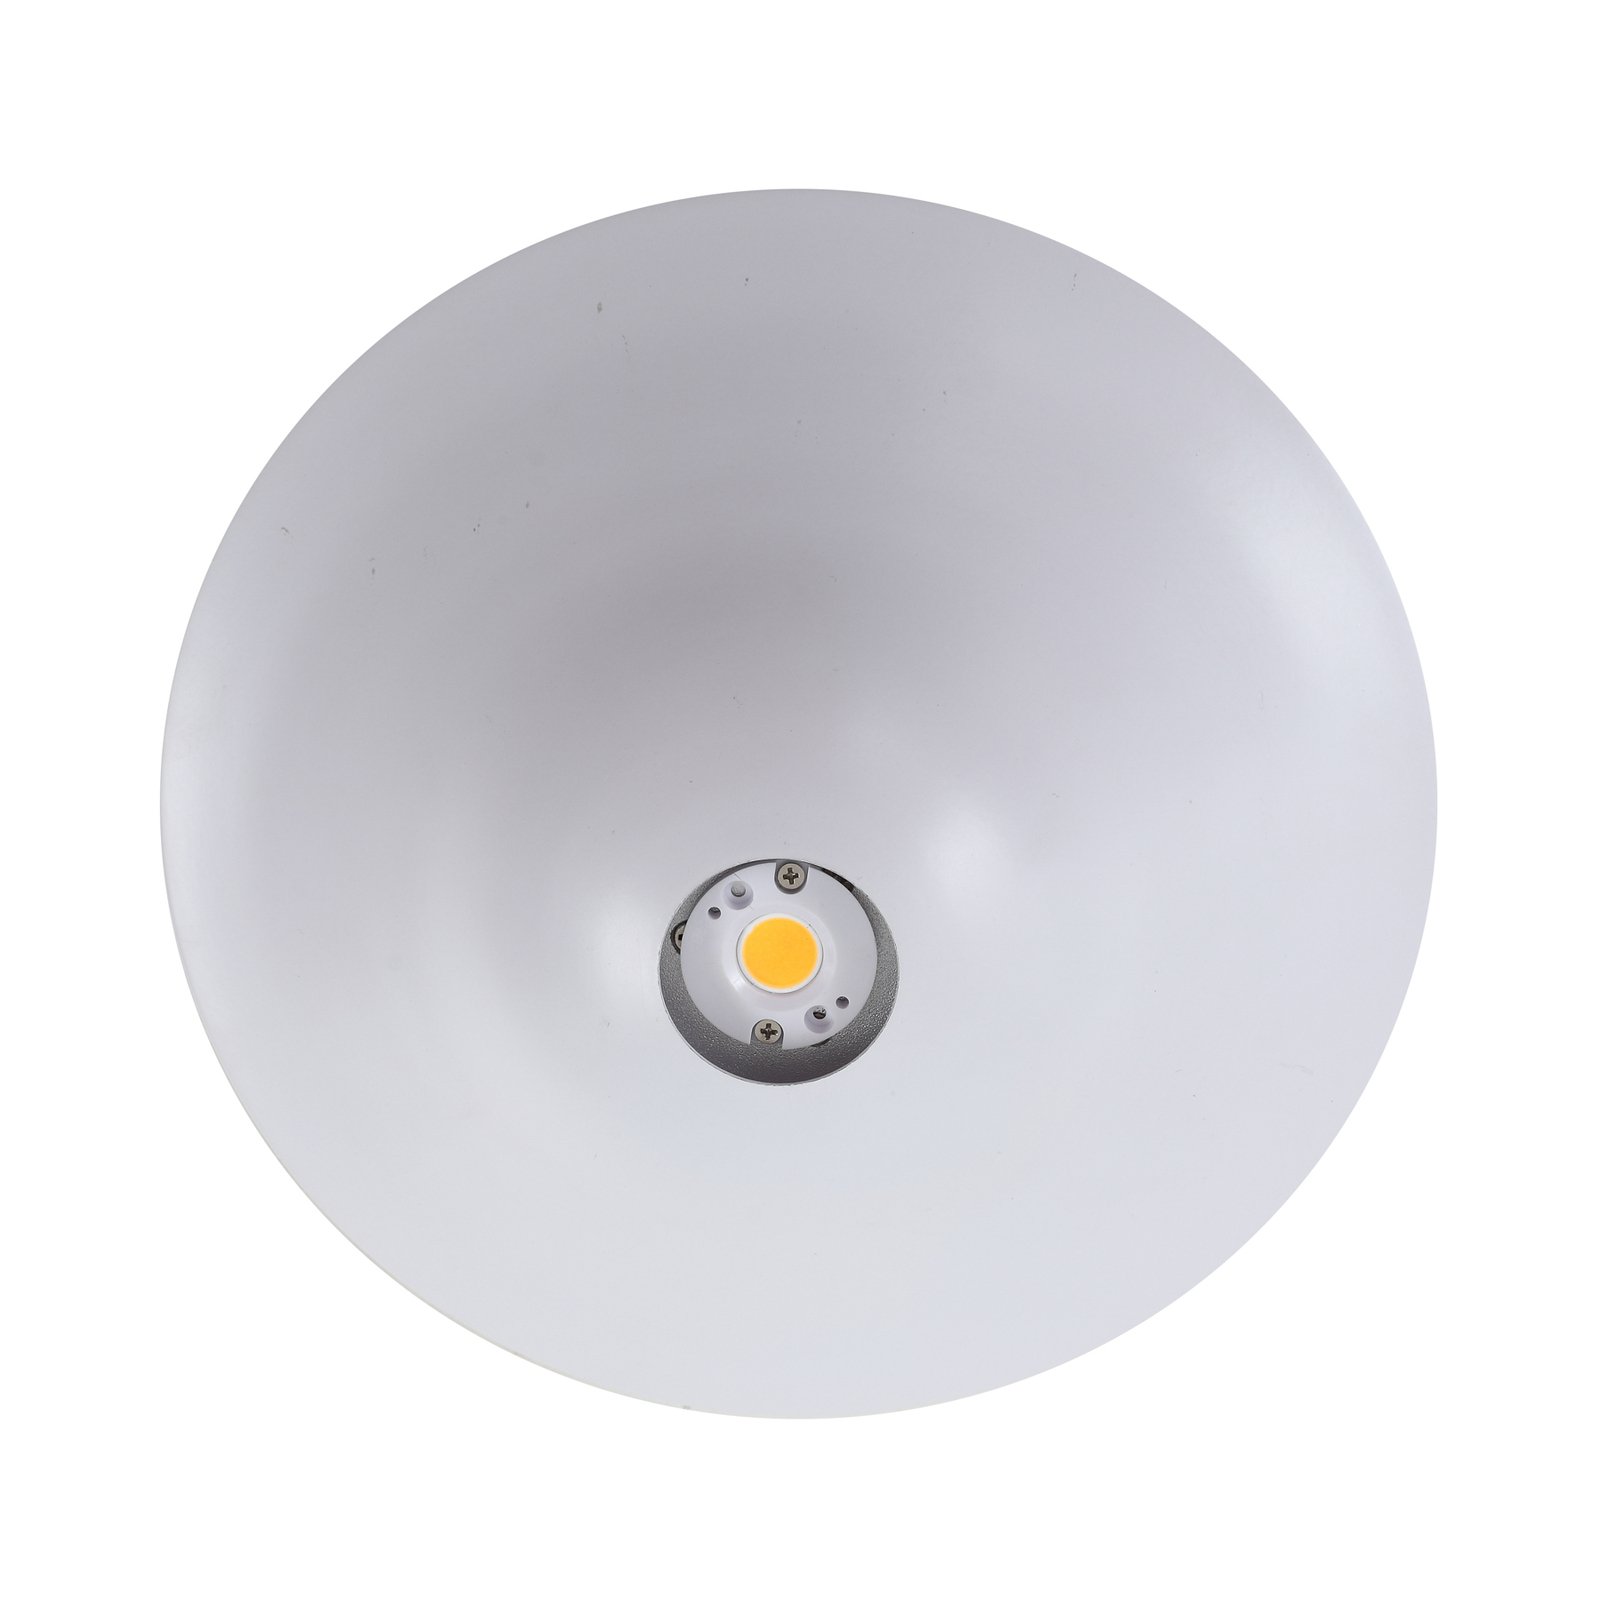 Lucande Plafonnier LED Orasa, verre, blanc/clair, Ø 43 cm